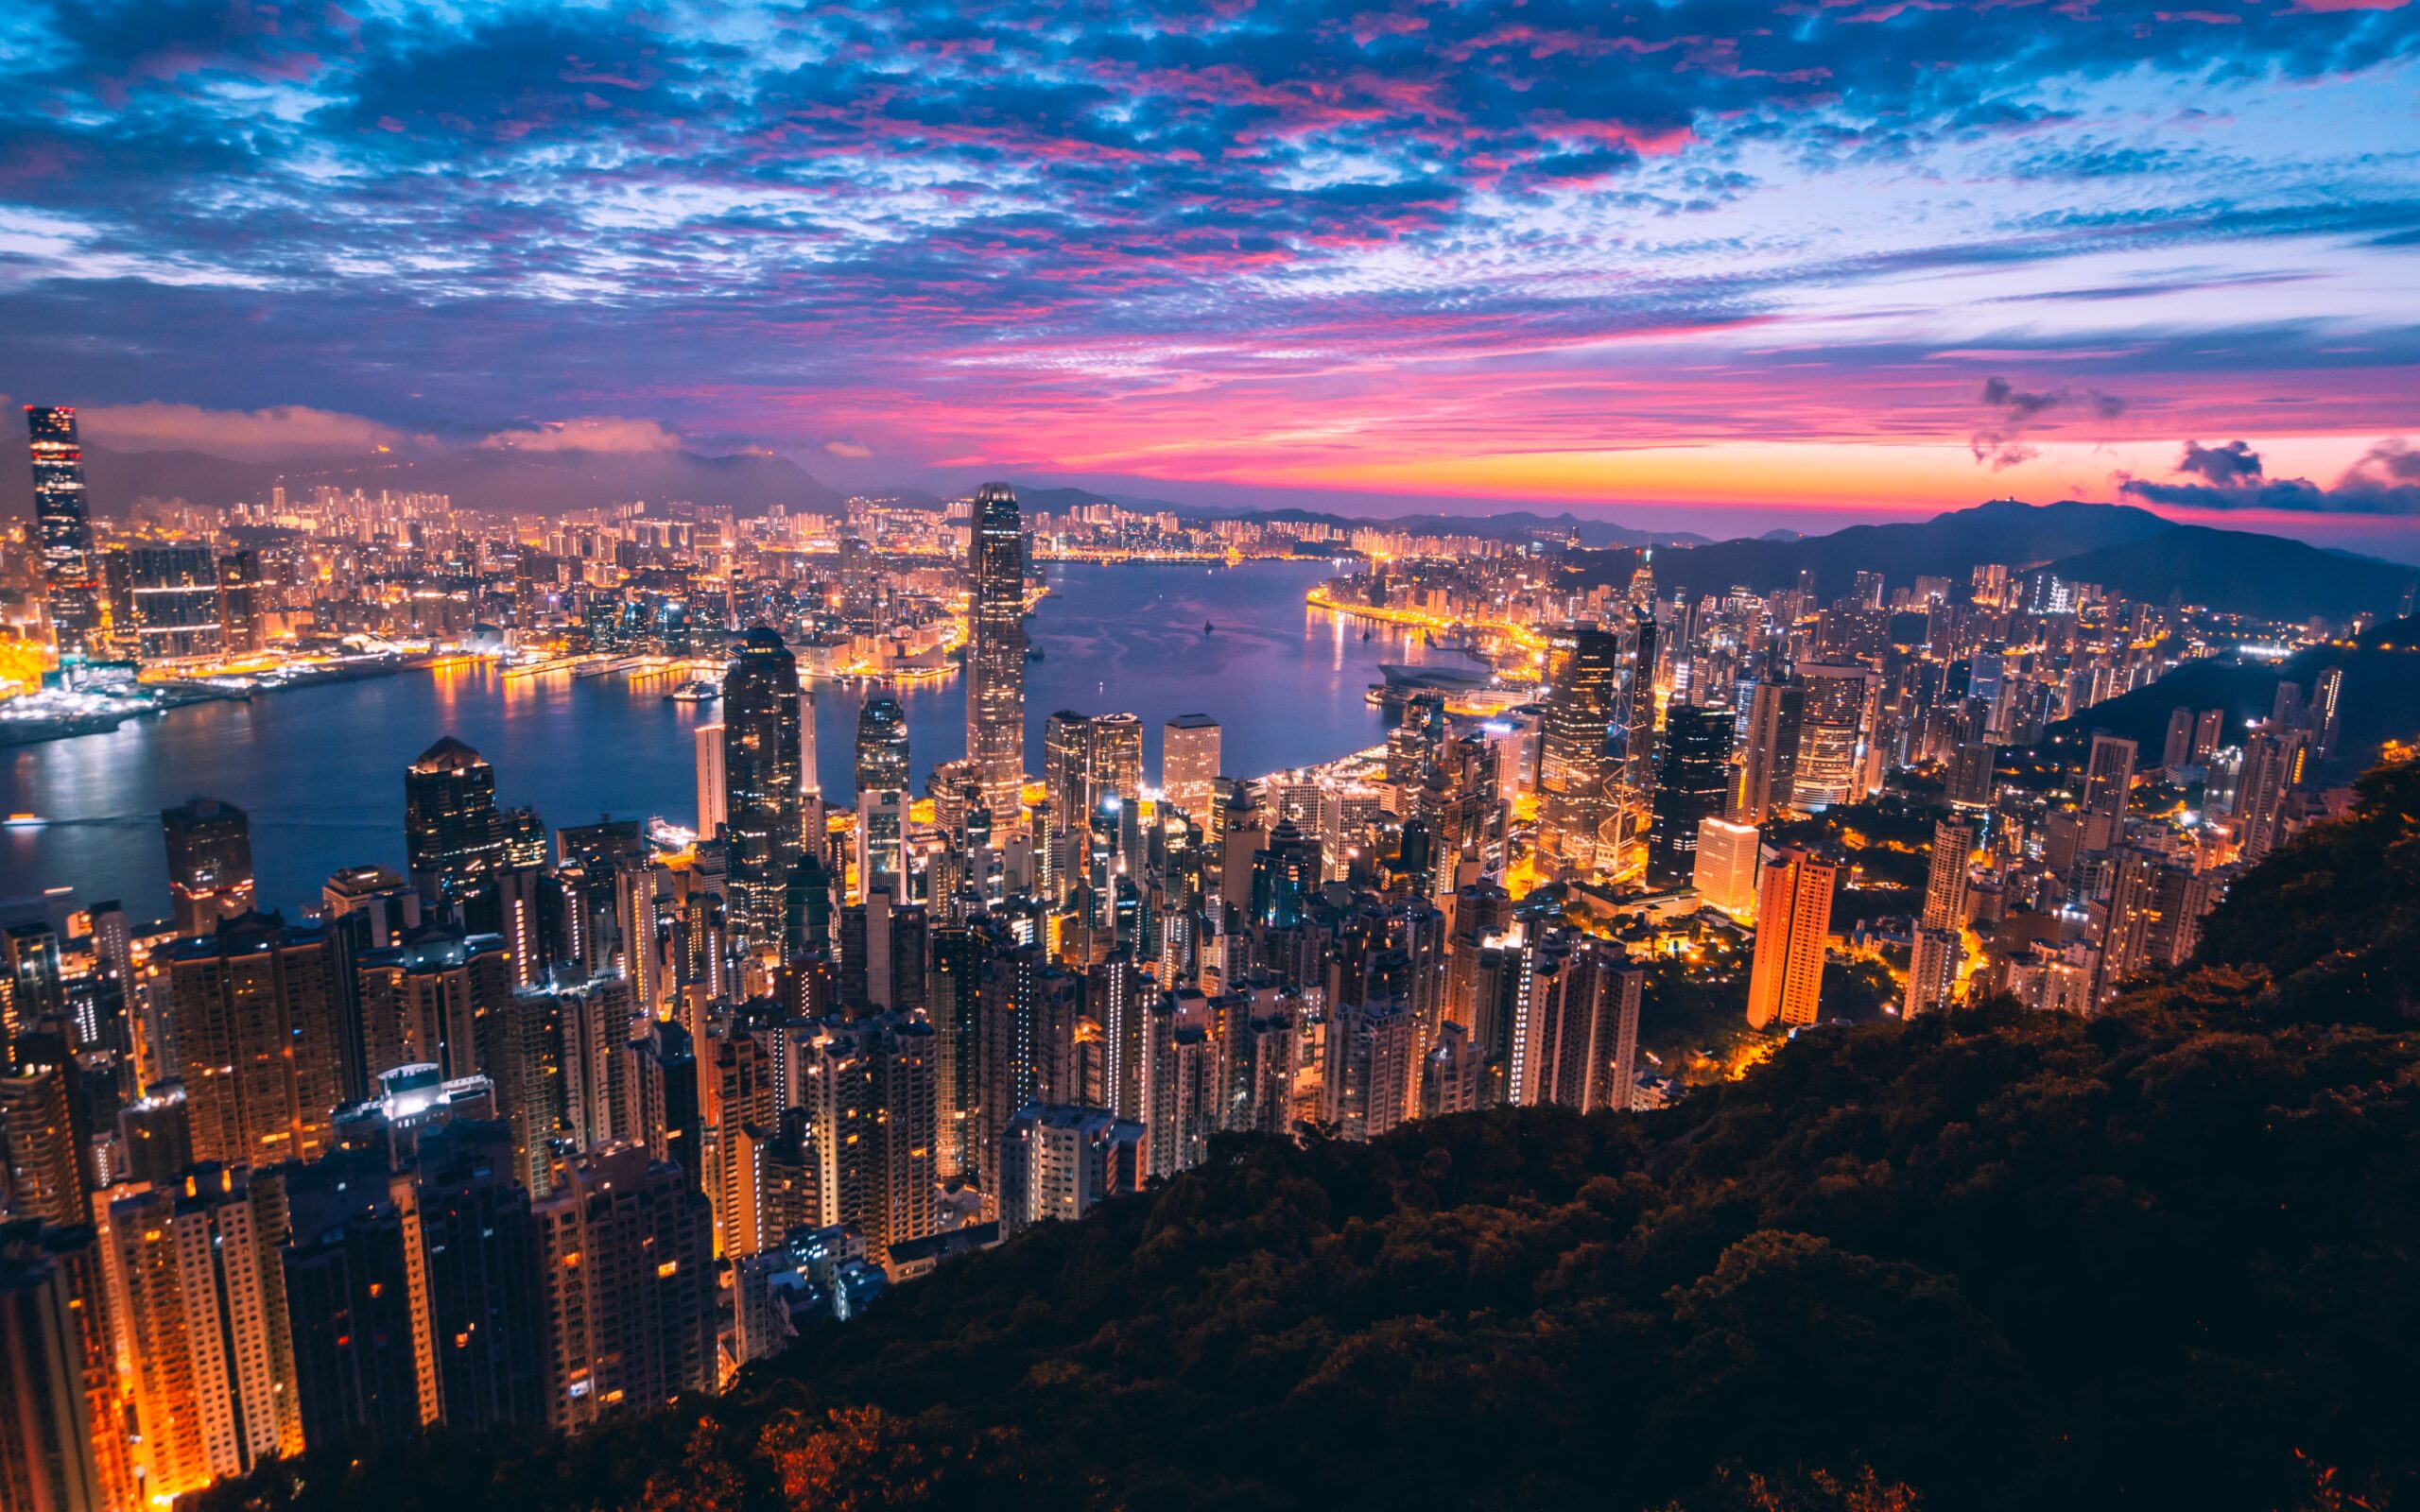 Hong Kong legislator extends invite to Coinbase